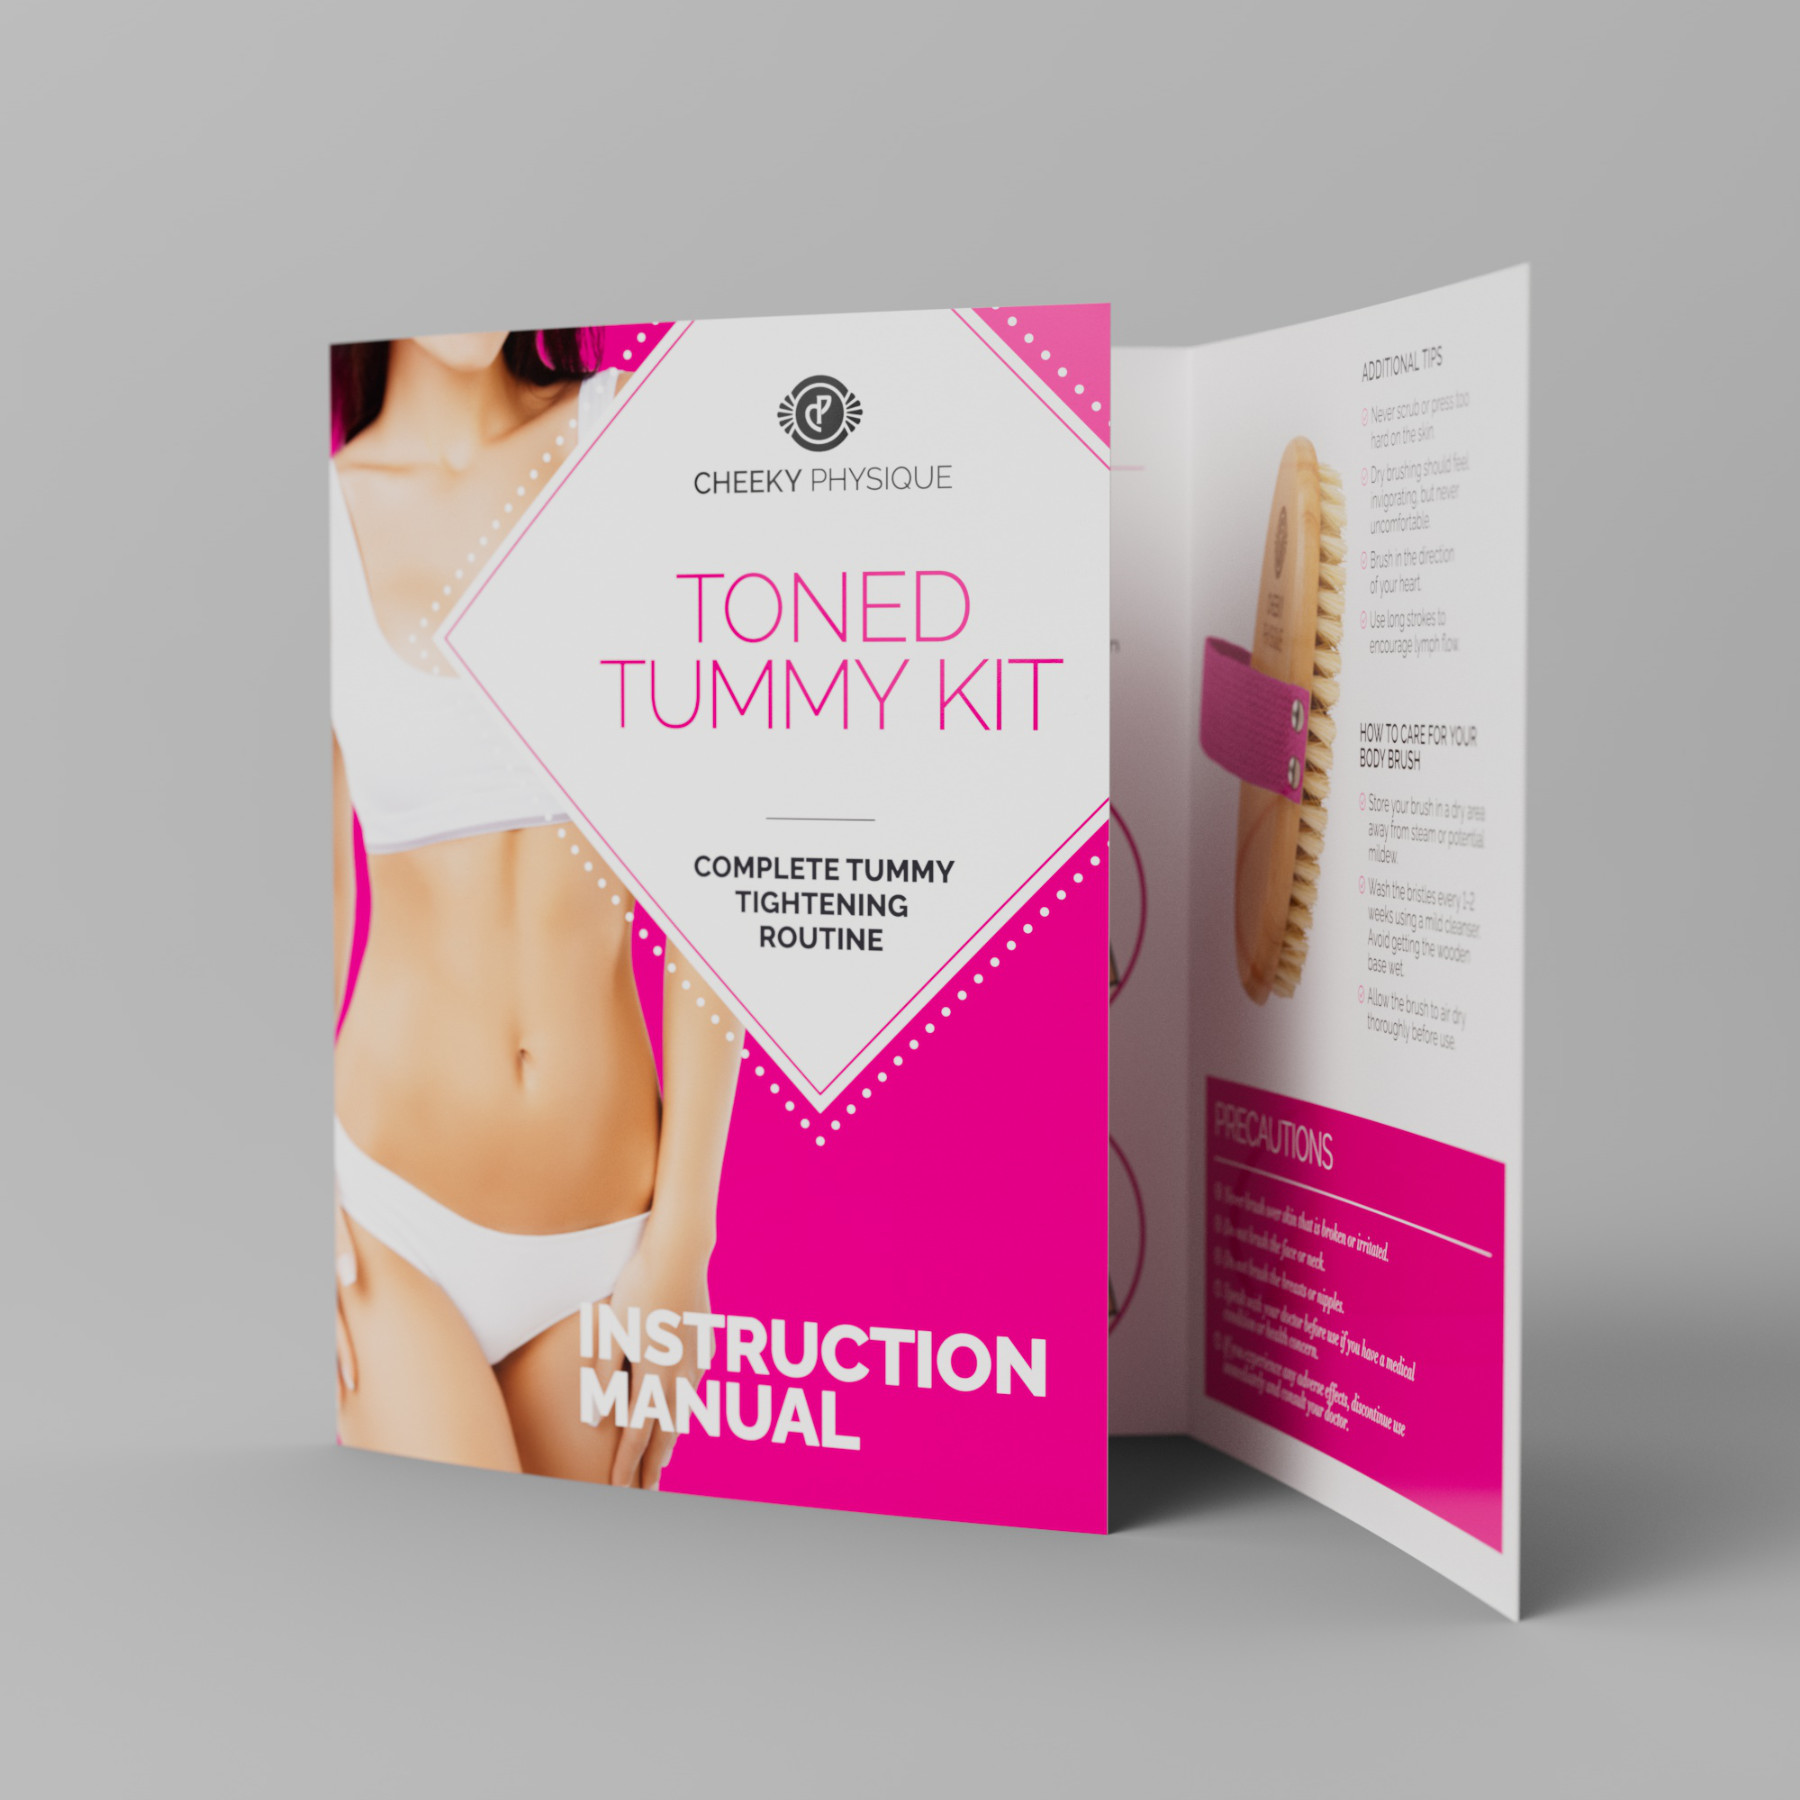 Toned Tummy Kit Manual